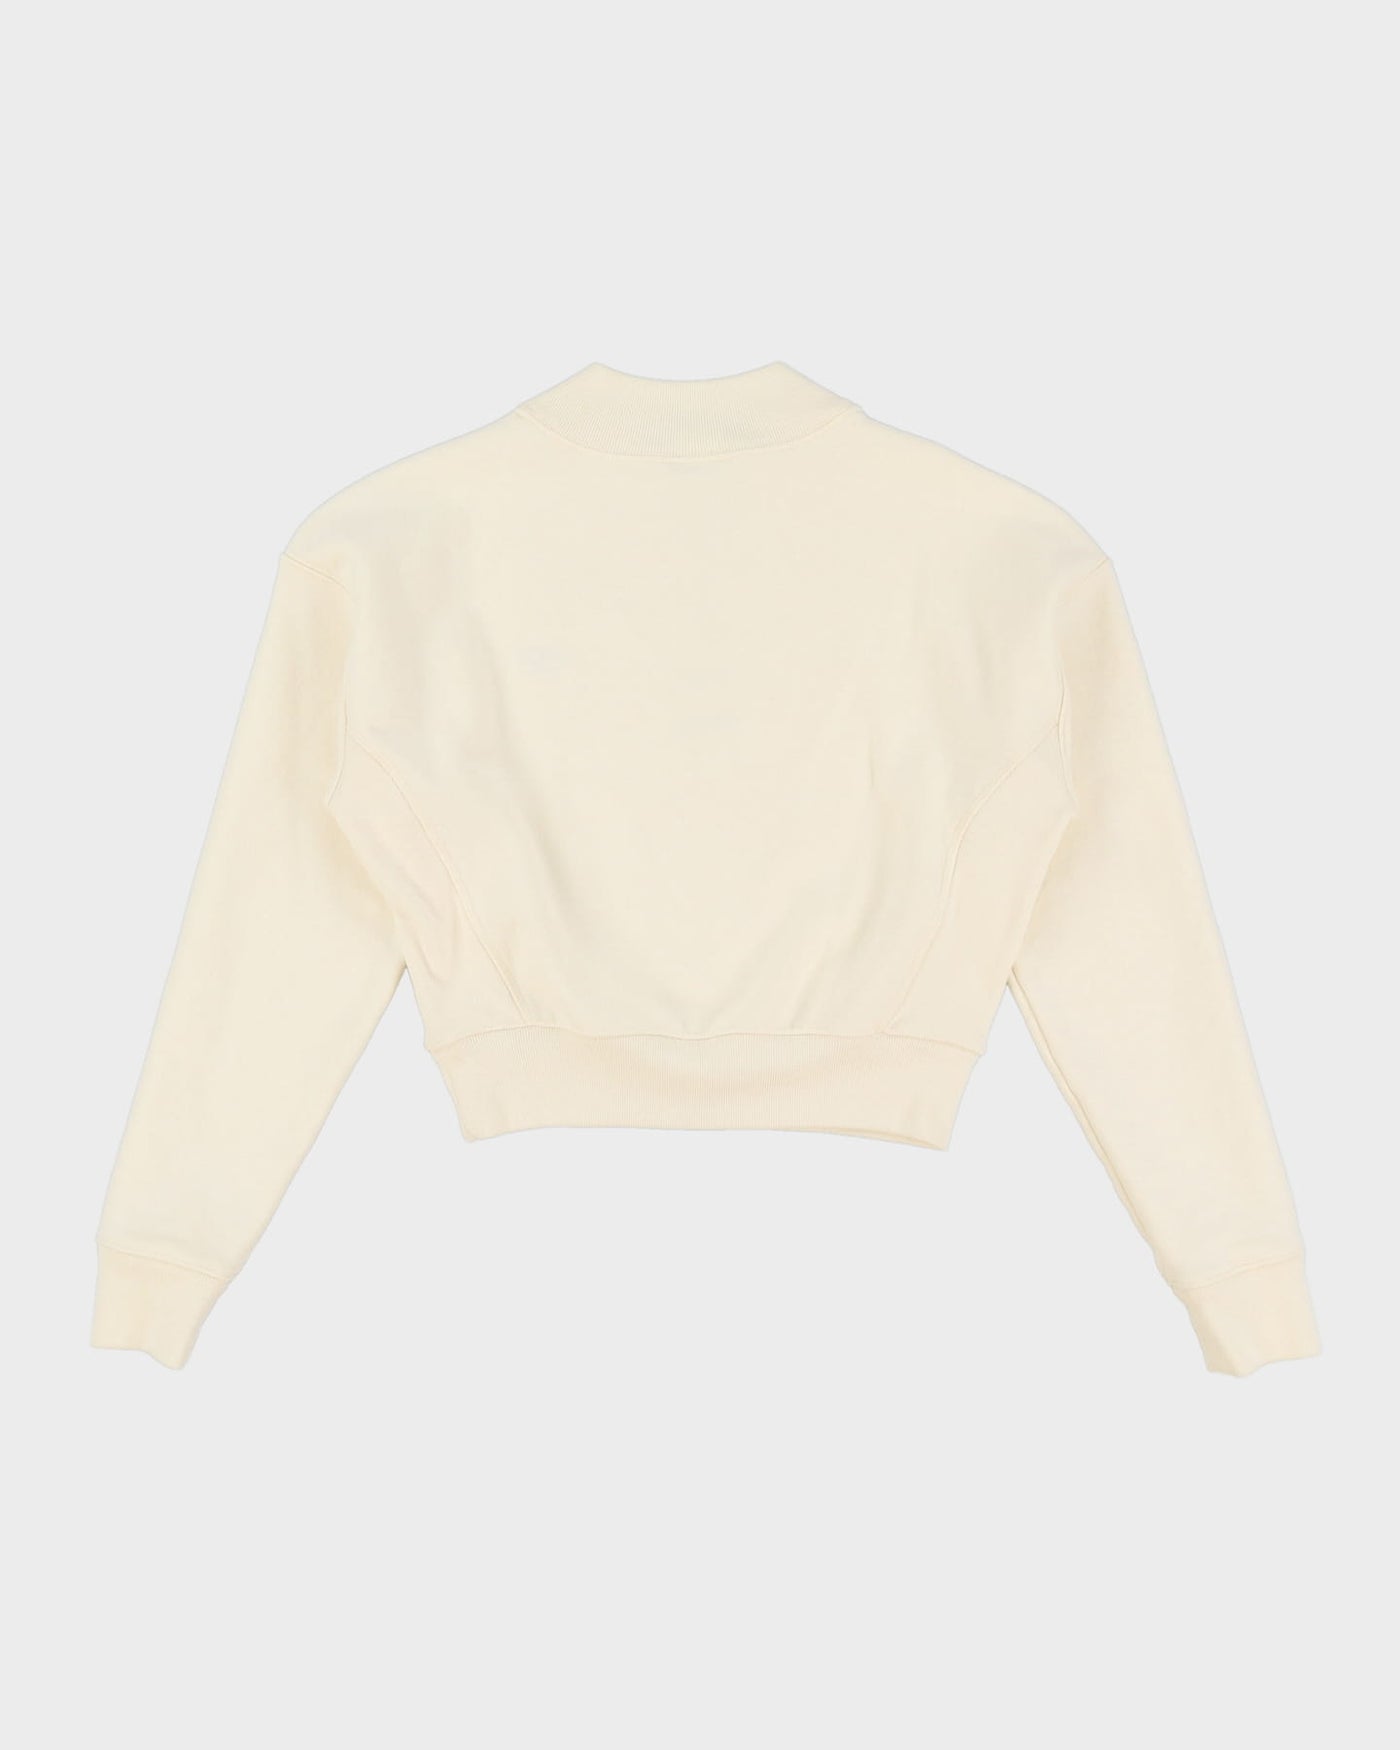 Champion Reverse Weave Cream Cropped Sweatshirt - S